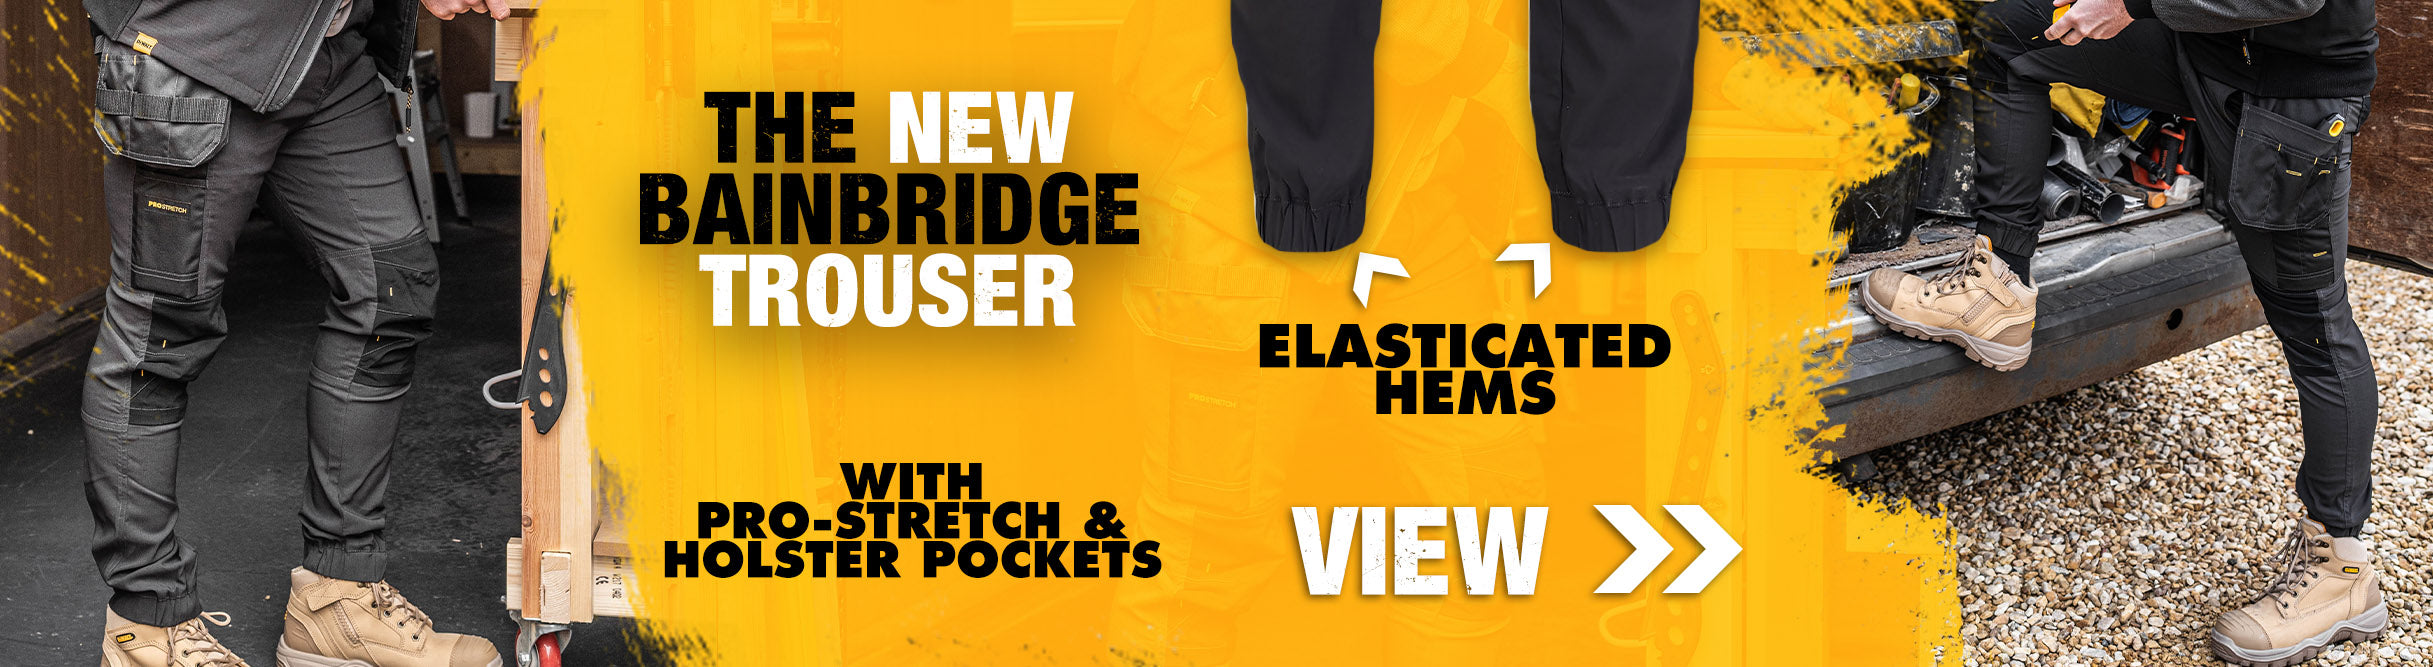 Bainbridge Holster Pocket Pro-Stretch Elasticated Hem Work Trouser